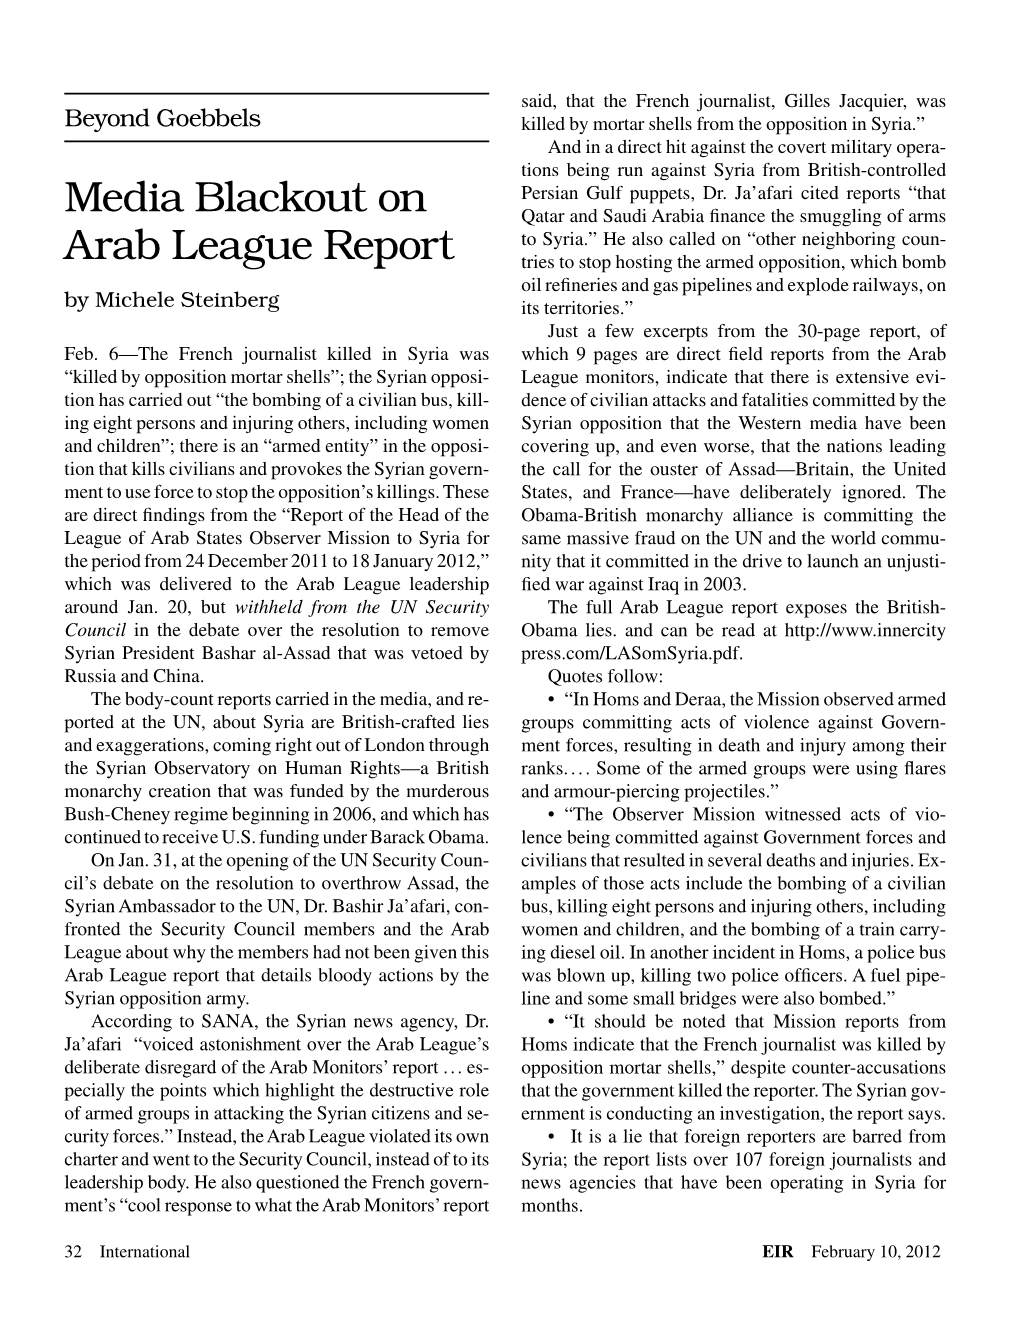 Media Blackout on Arab League Report